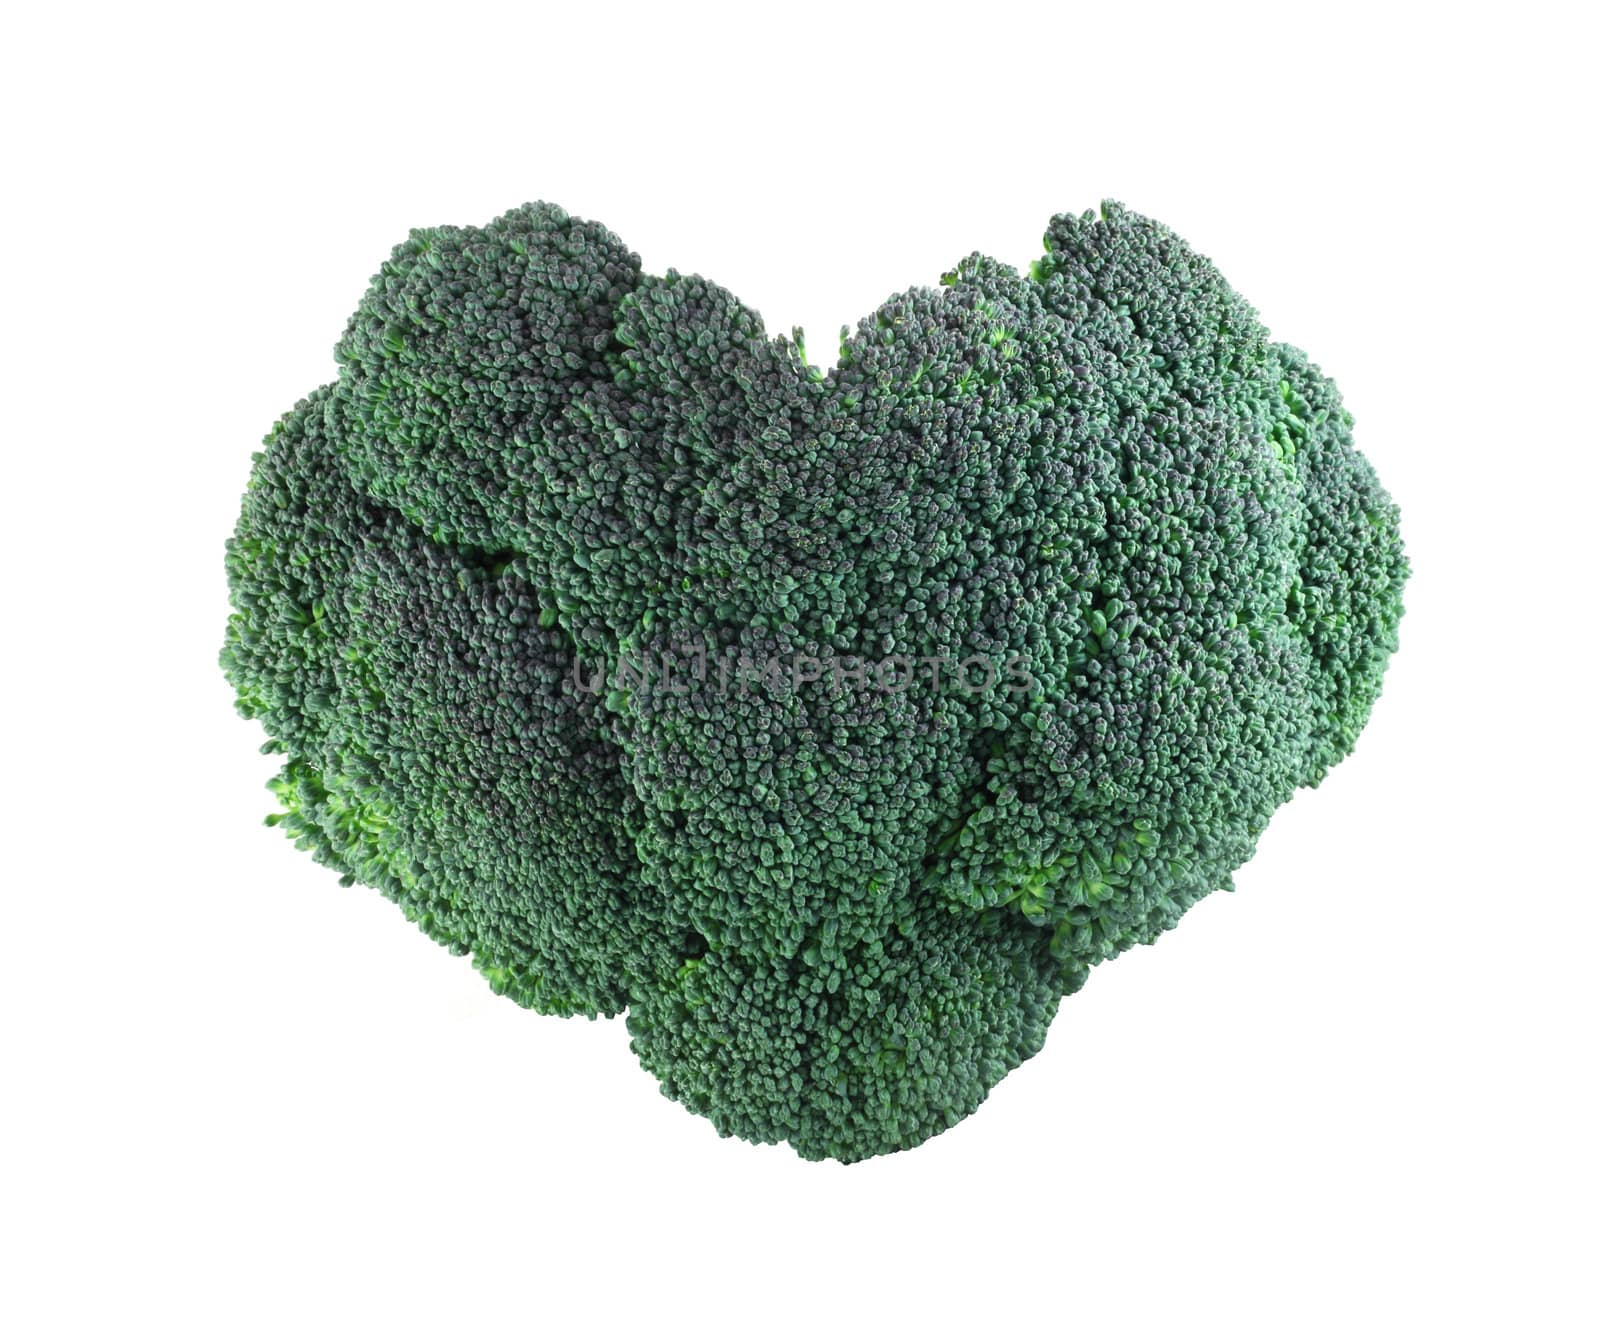 Heart shaped broccoli isolated on white background